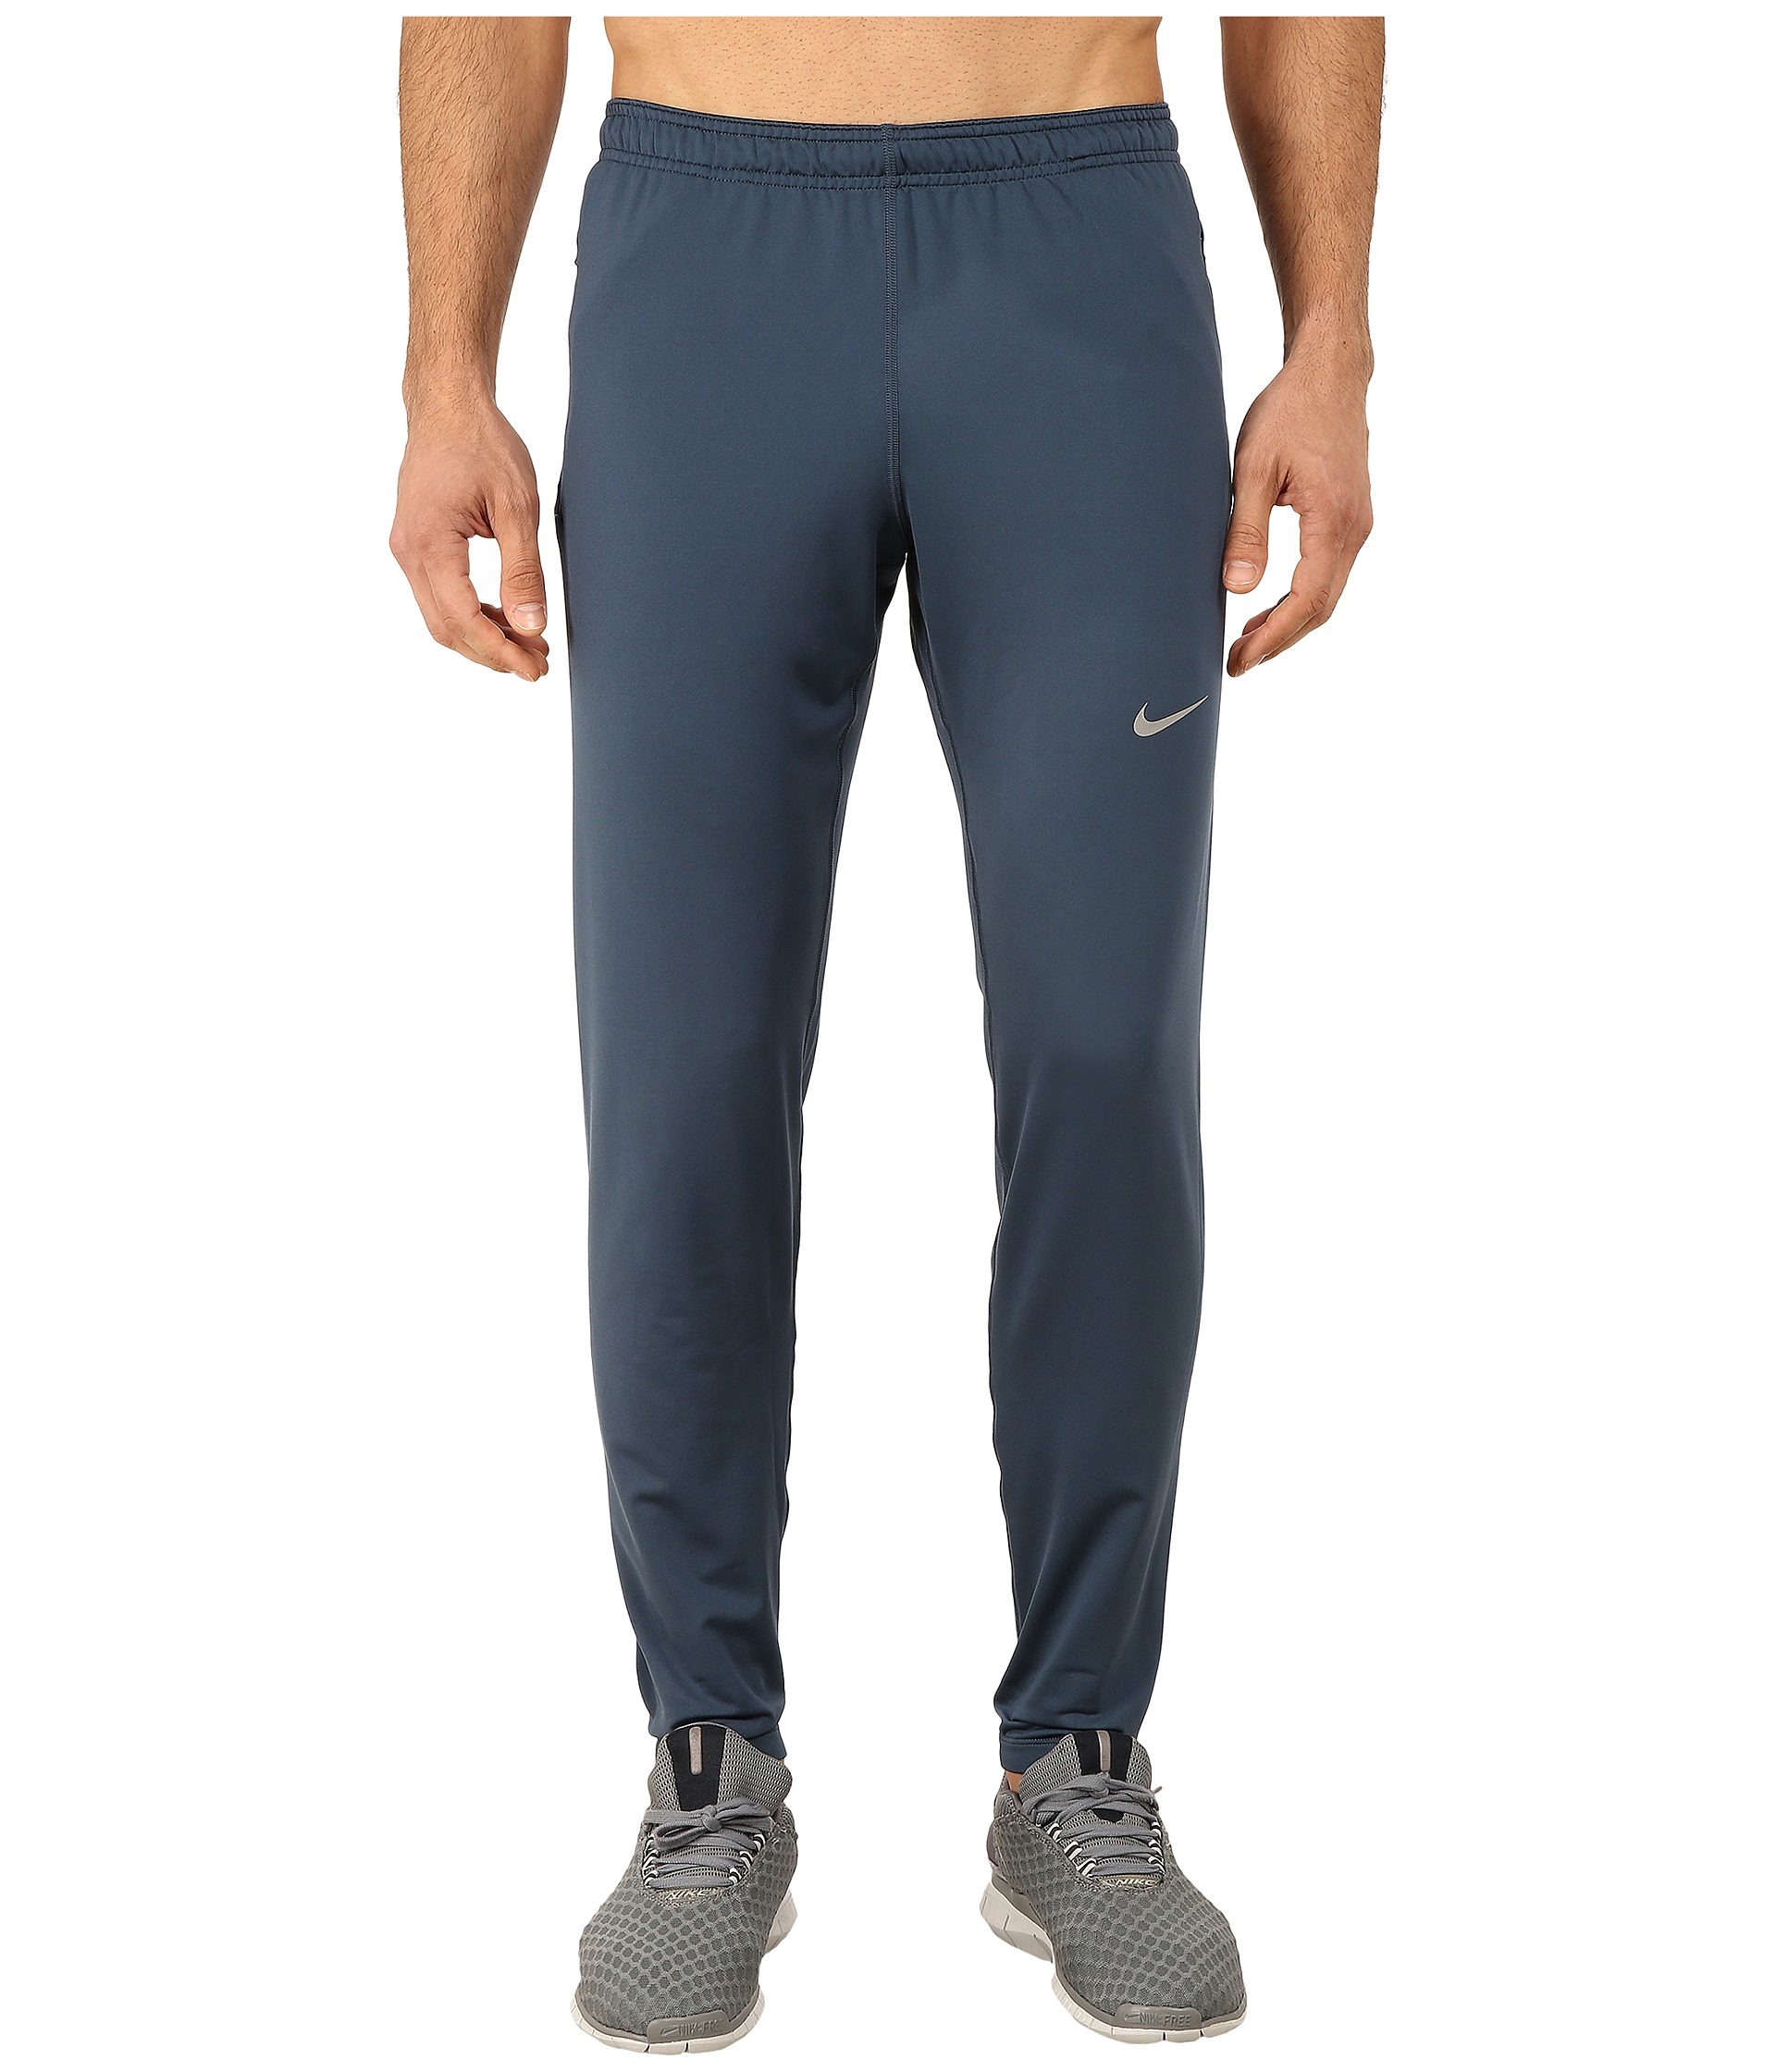 Nike Dri-fit™ Otc65 Track Pants in Blue for Men - Lyst